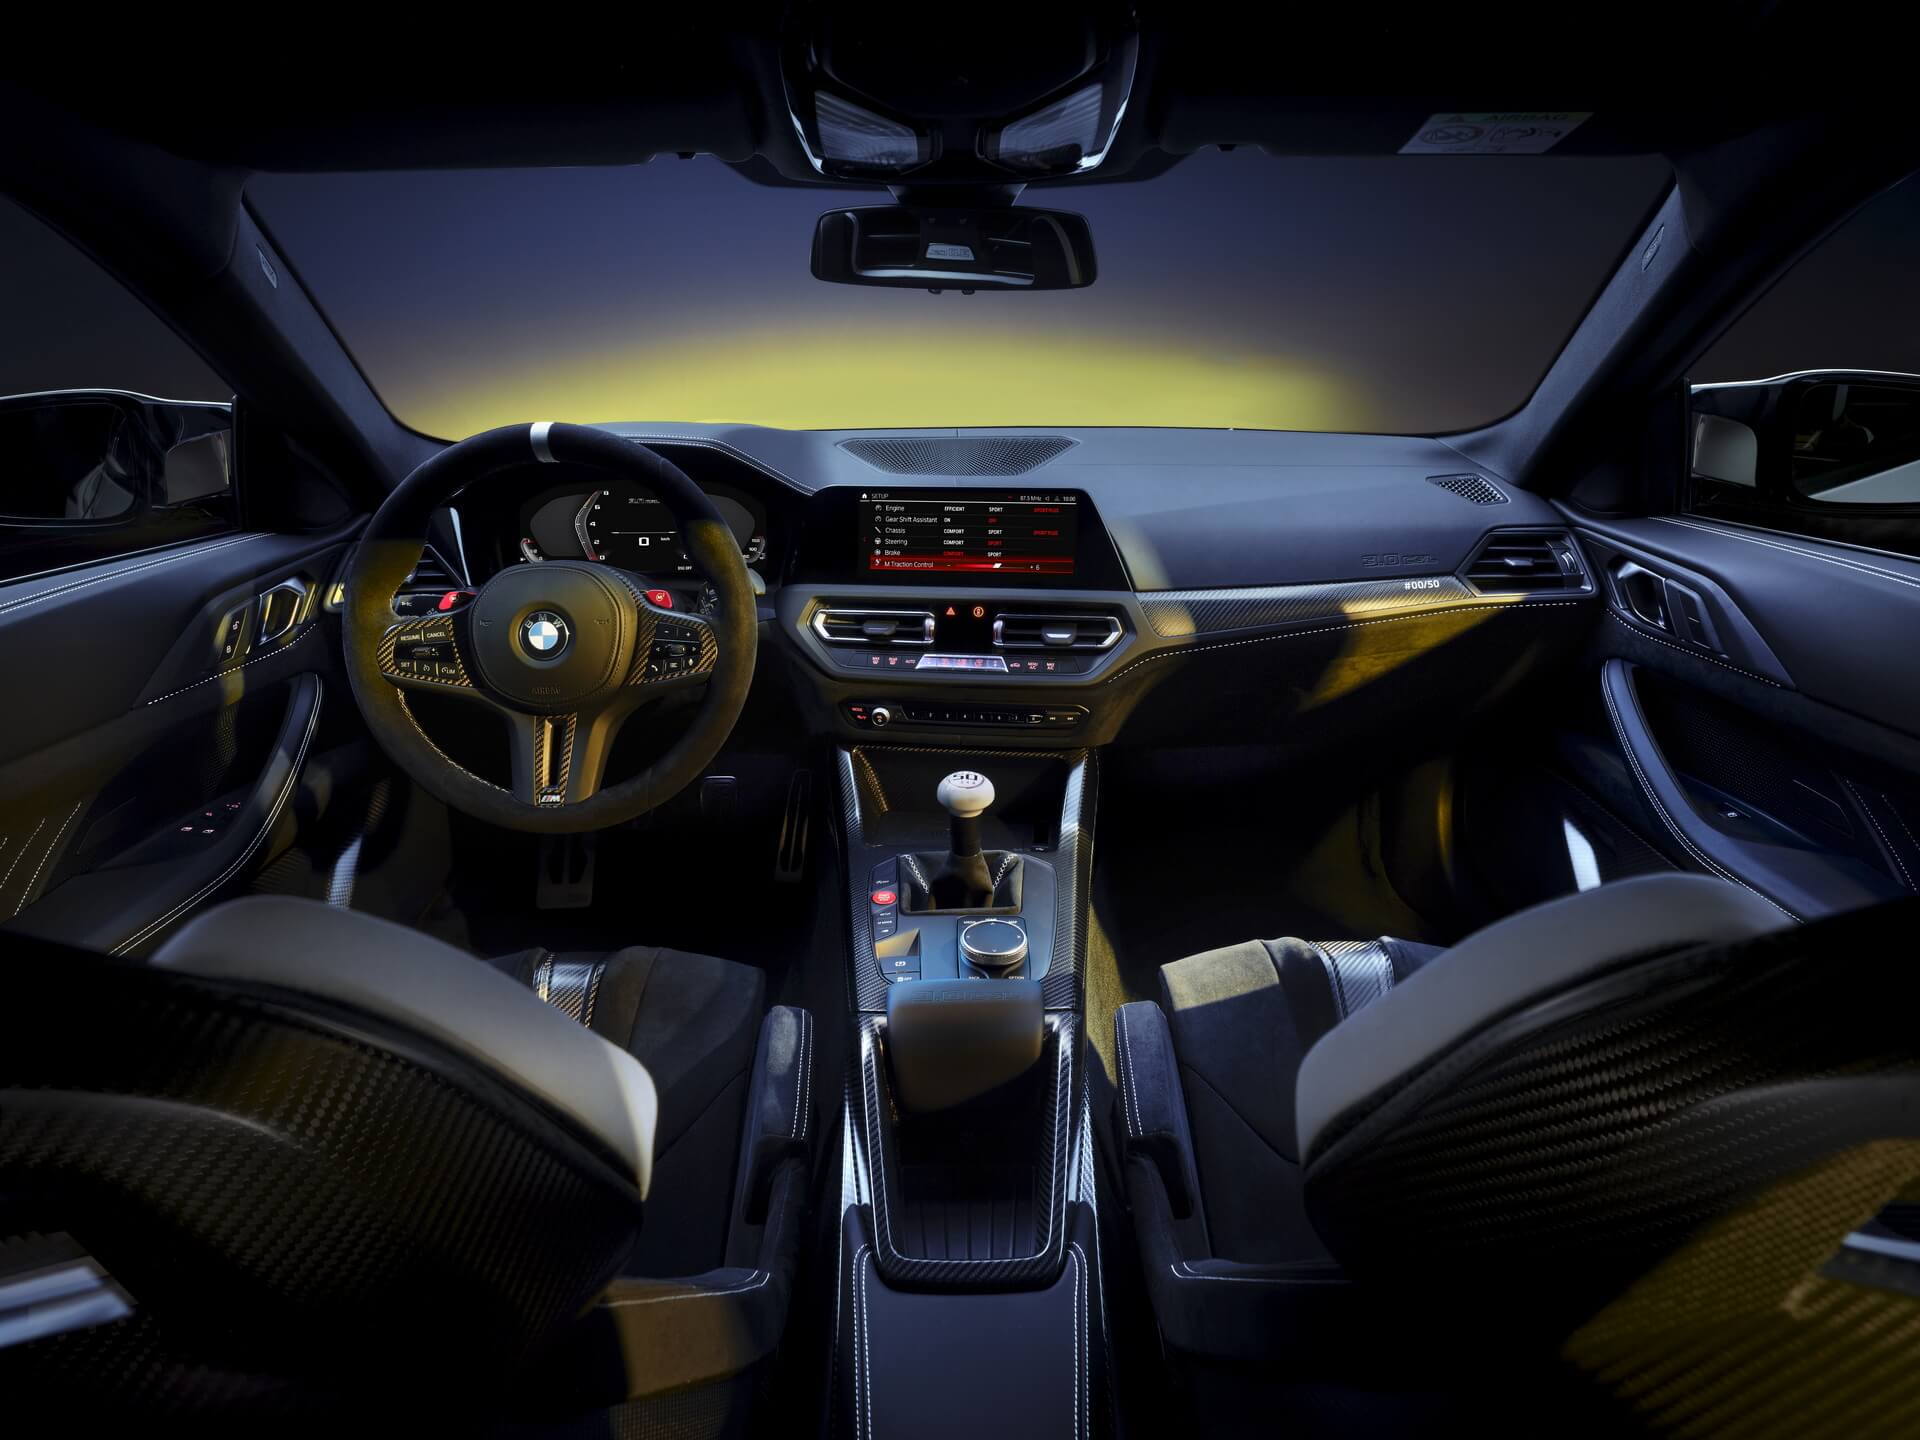 BMW 3.0 CSL interior